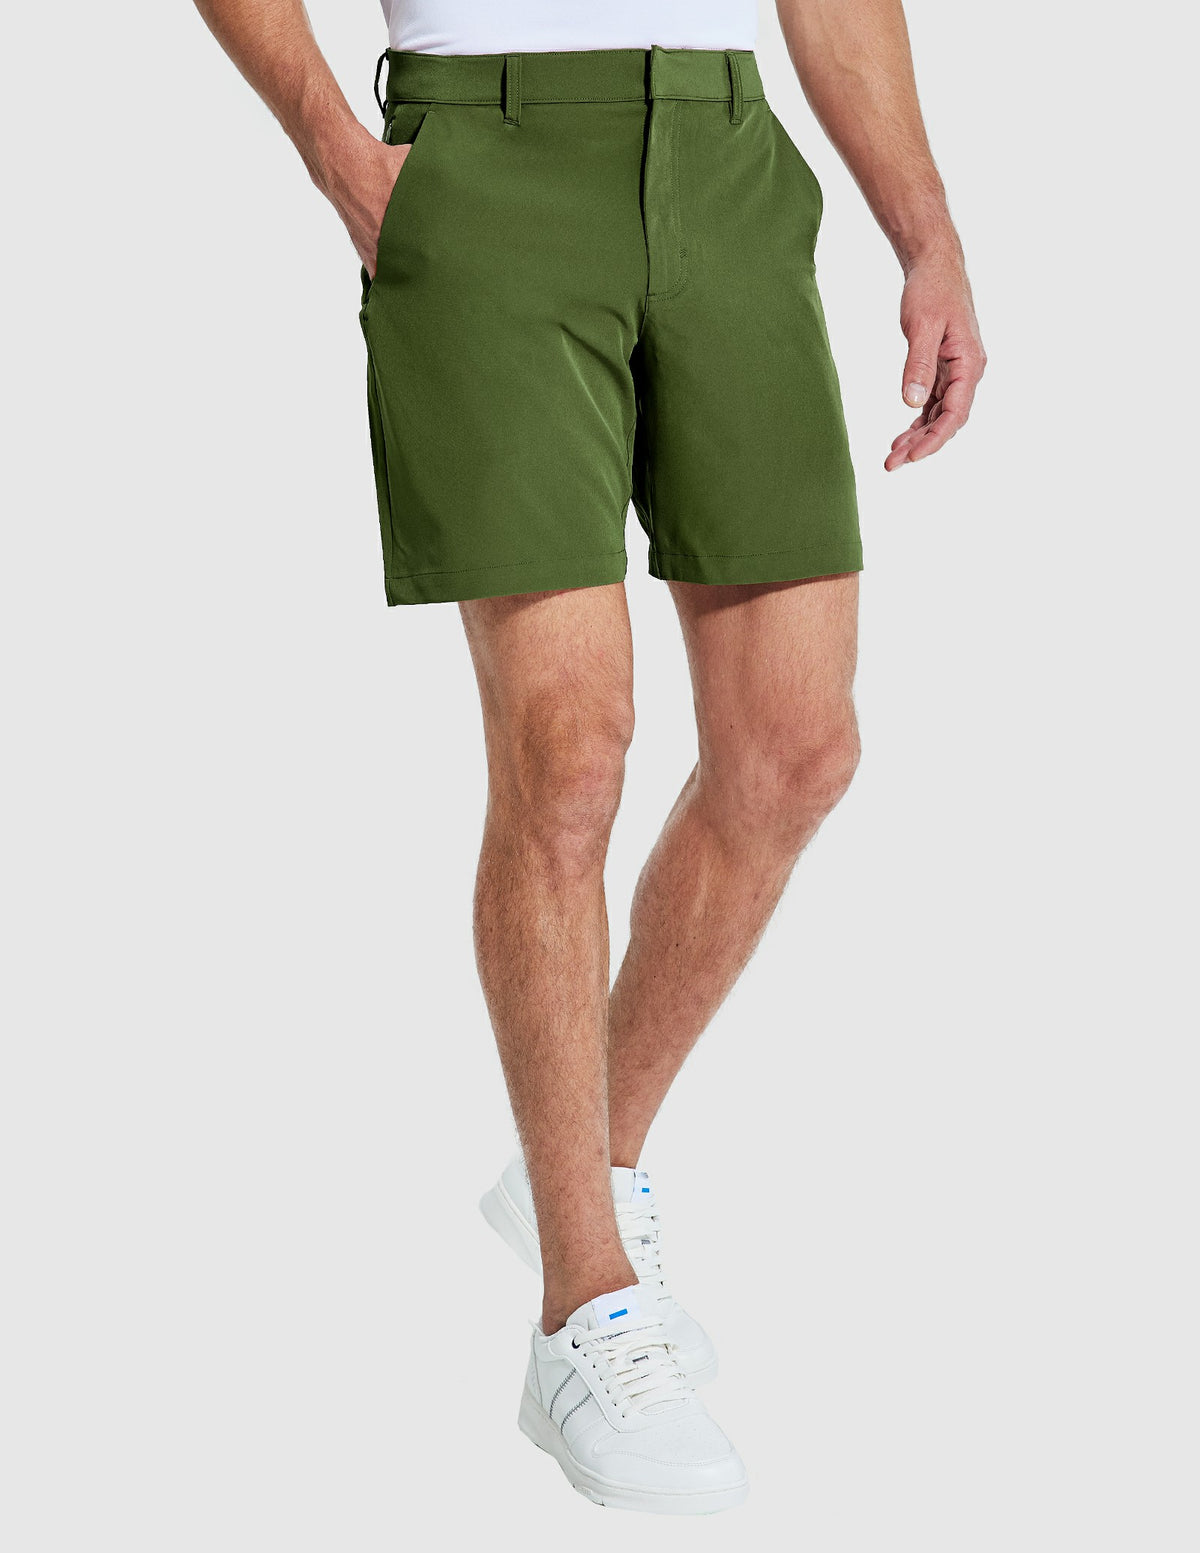 Men's Stretch Golf Shorts 5 Pockets 8" Quick Dry Shorts